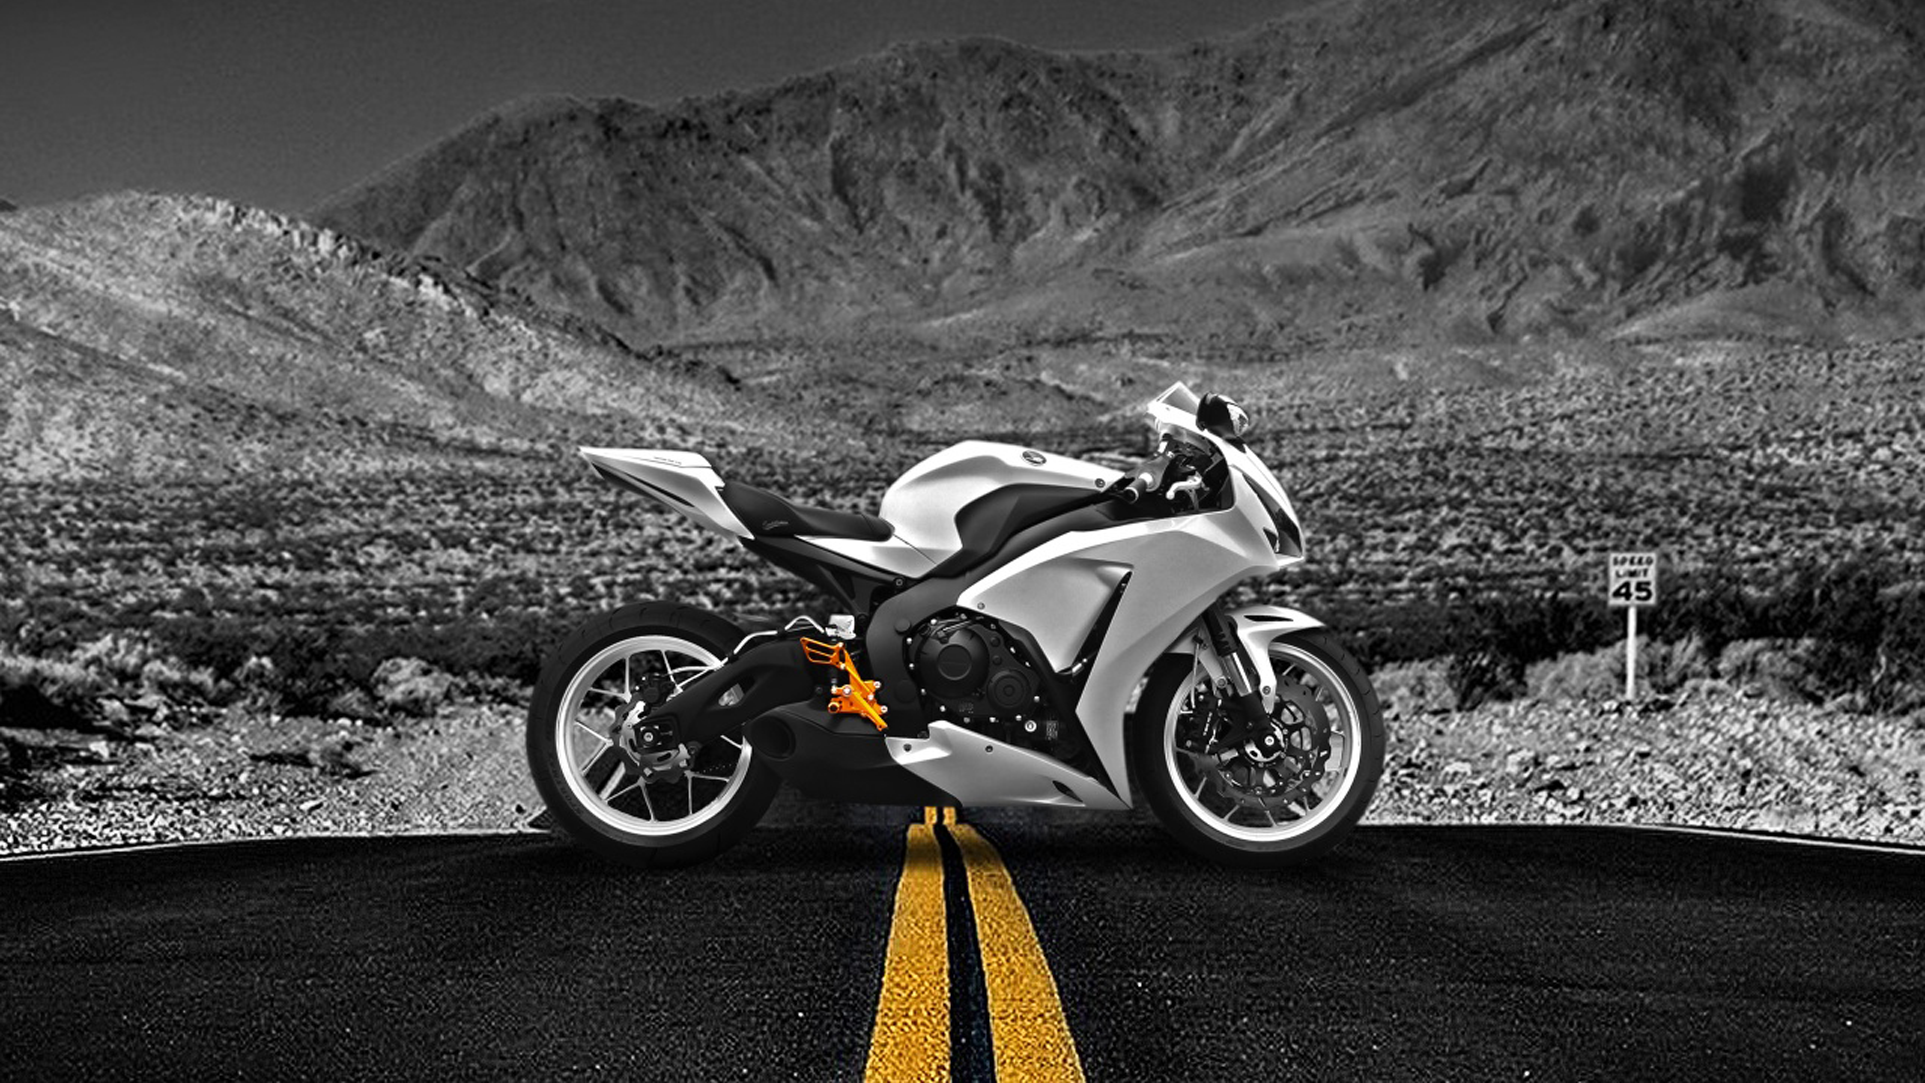 HD Motorcycle Wallpapers | PixelsTalk.Net